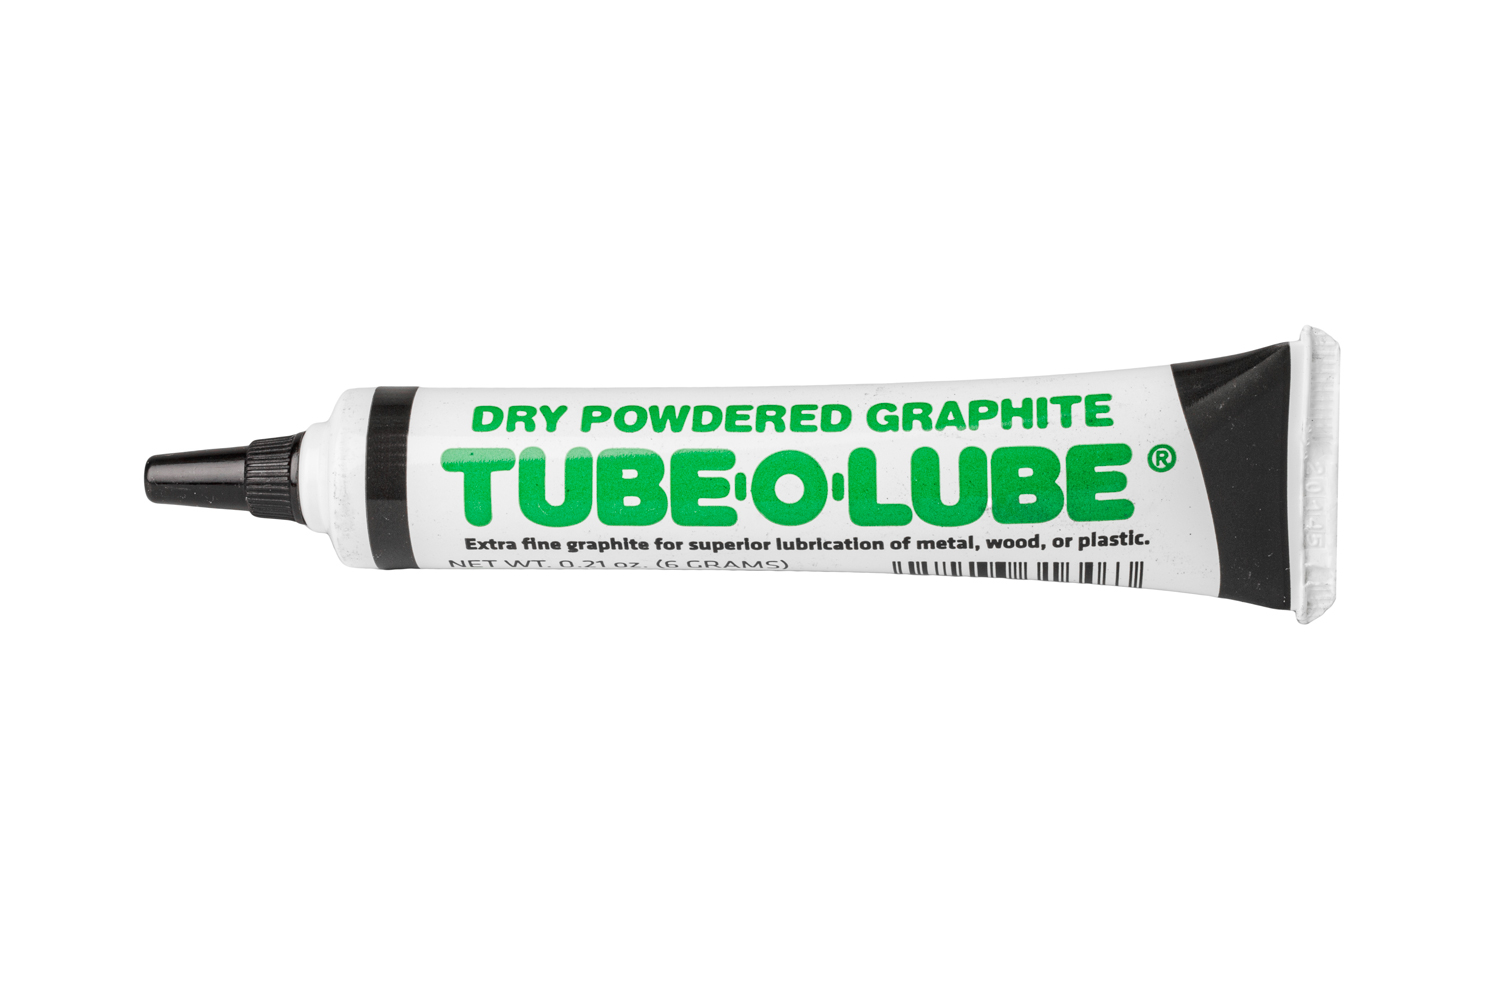 Cub Scout Derby Dry Powdered Graphite Tube-O-Lube - 1 Tube – Make